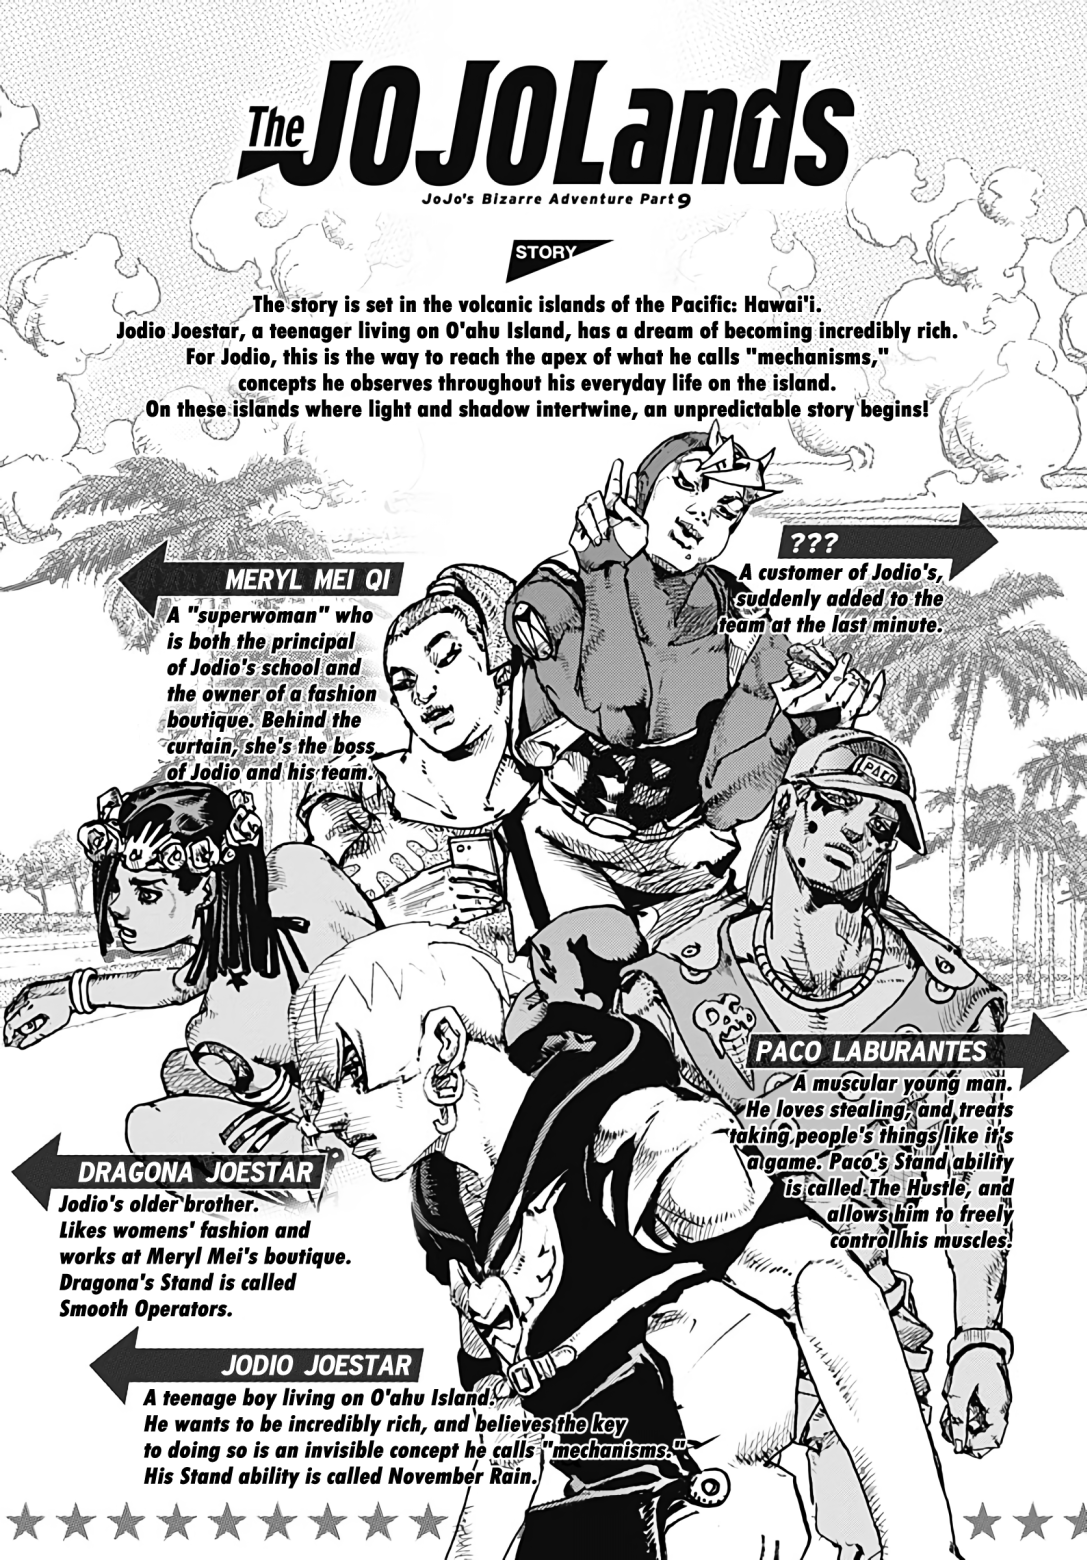 Jojo's Bizarre Adventure Part 9 - The Jojolands - Page 1